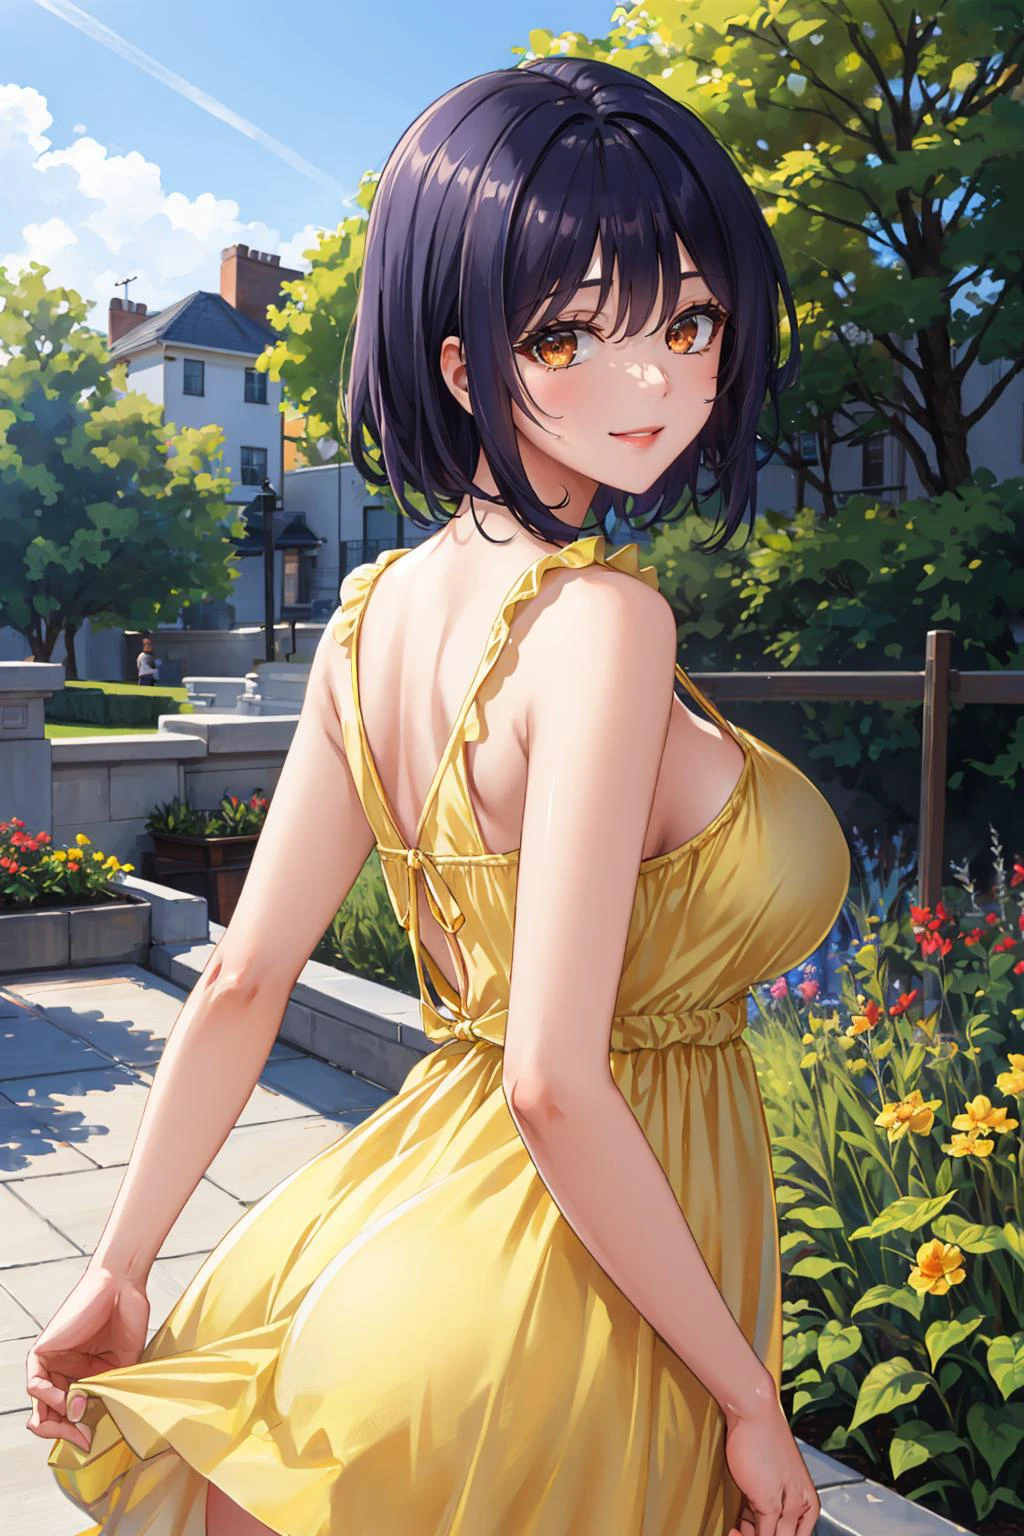 masterpiece, best quality,  otodama tamako, (yellow sundress:1.4), from behind, garden, large breasts, smile  edgYSD,woman wearing a yellow sundress